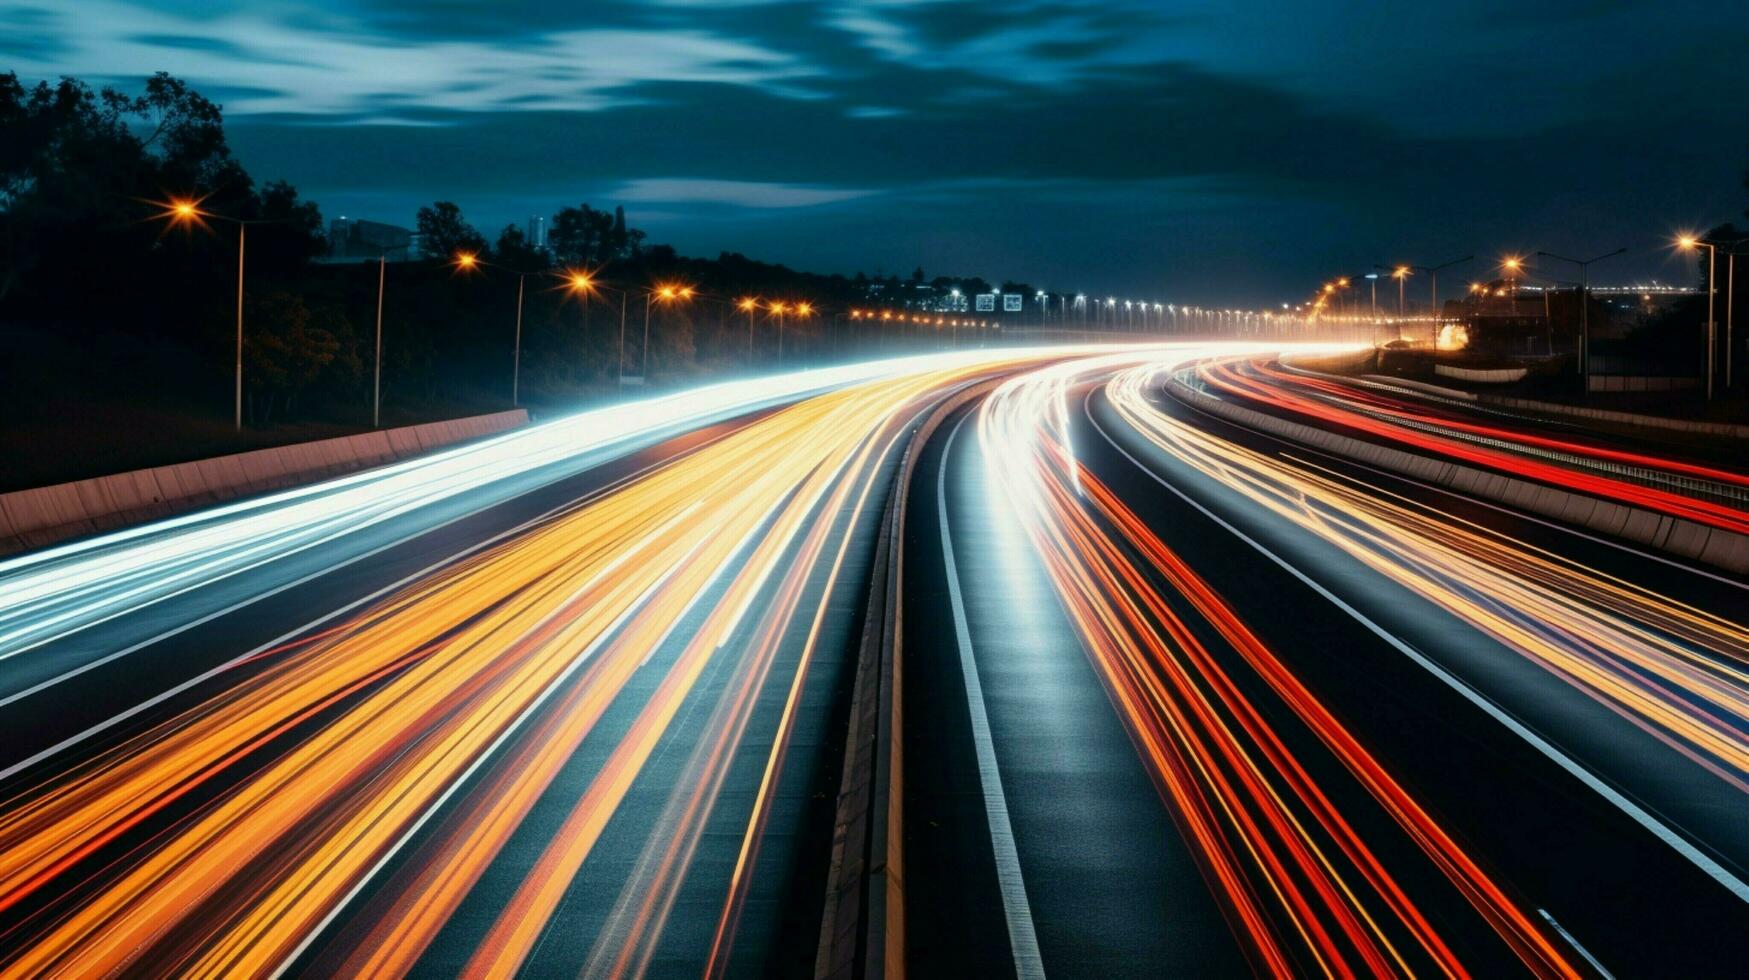 Noche tráfico difumina a lo largo oscuro múltiple carril autopista foto